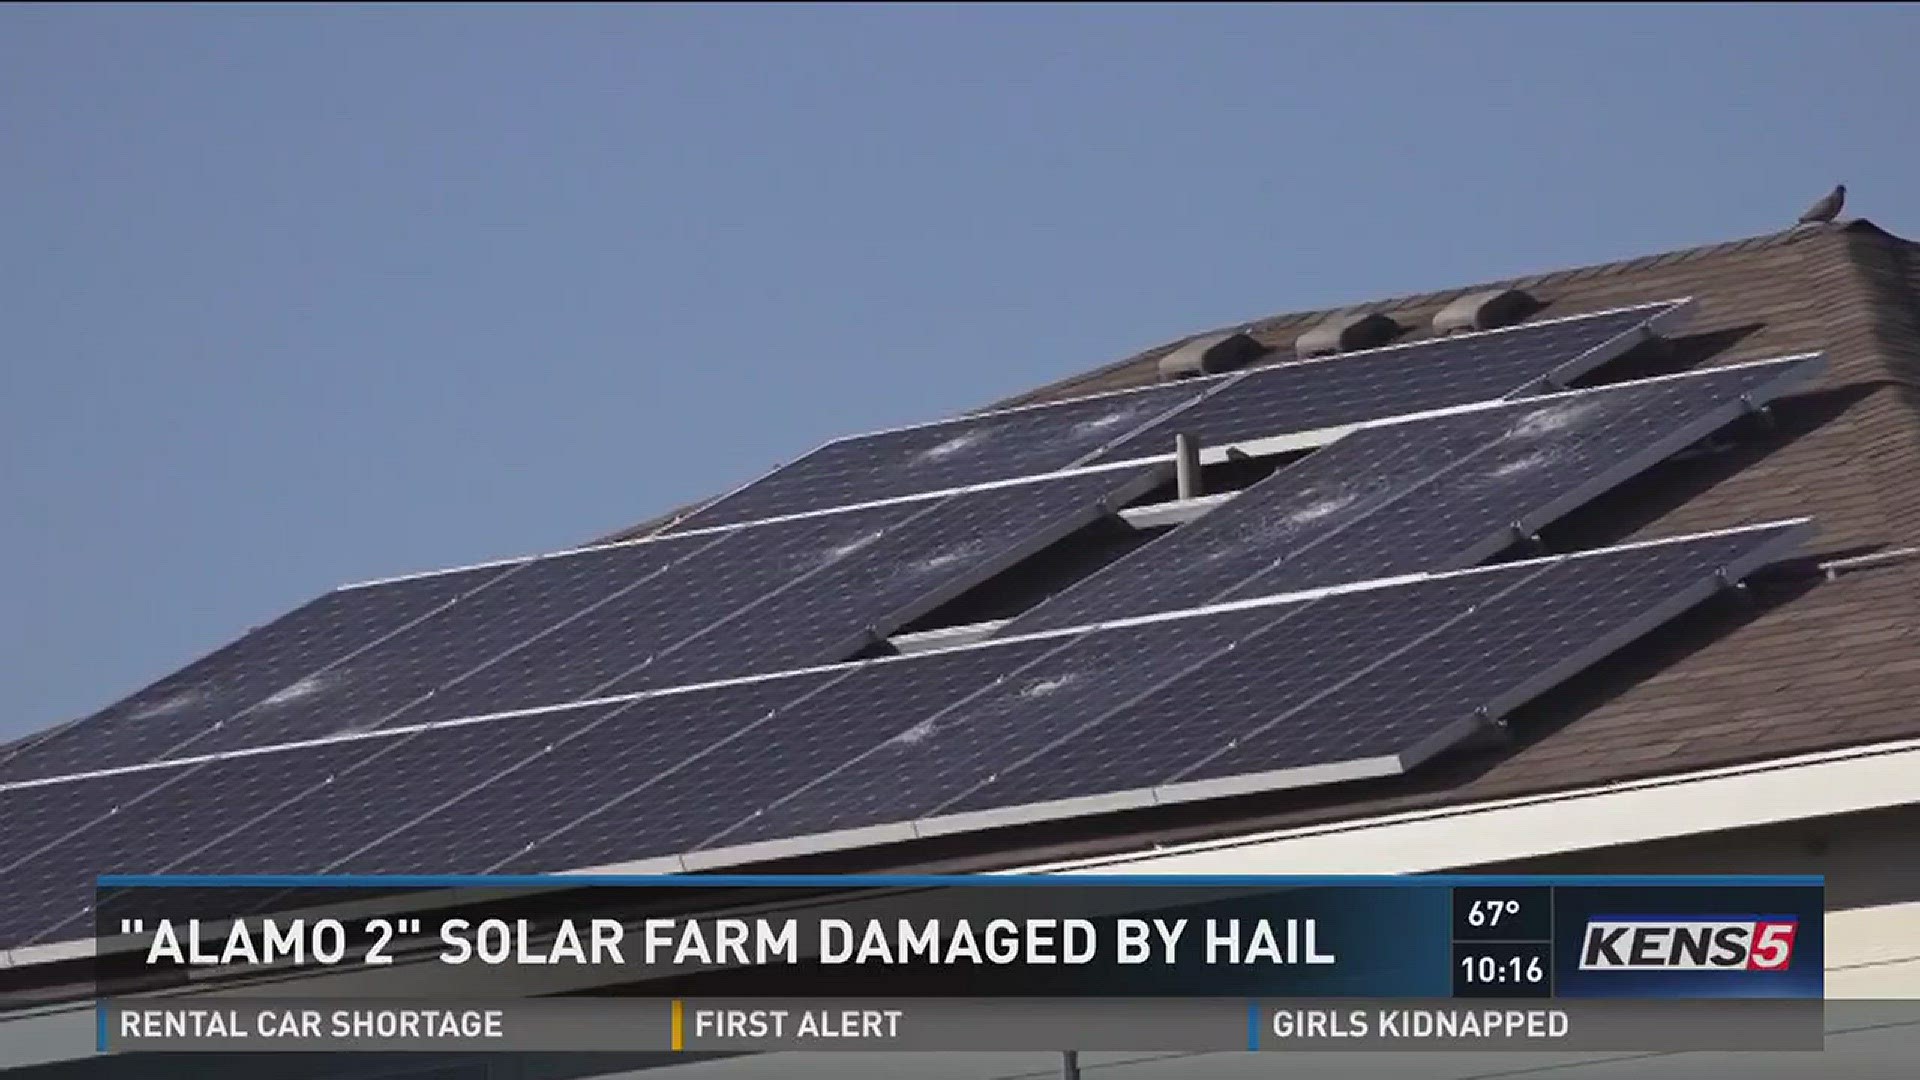 Alamo 2 solar farm damaged by hail